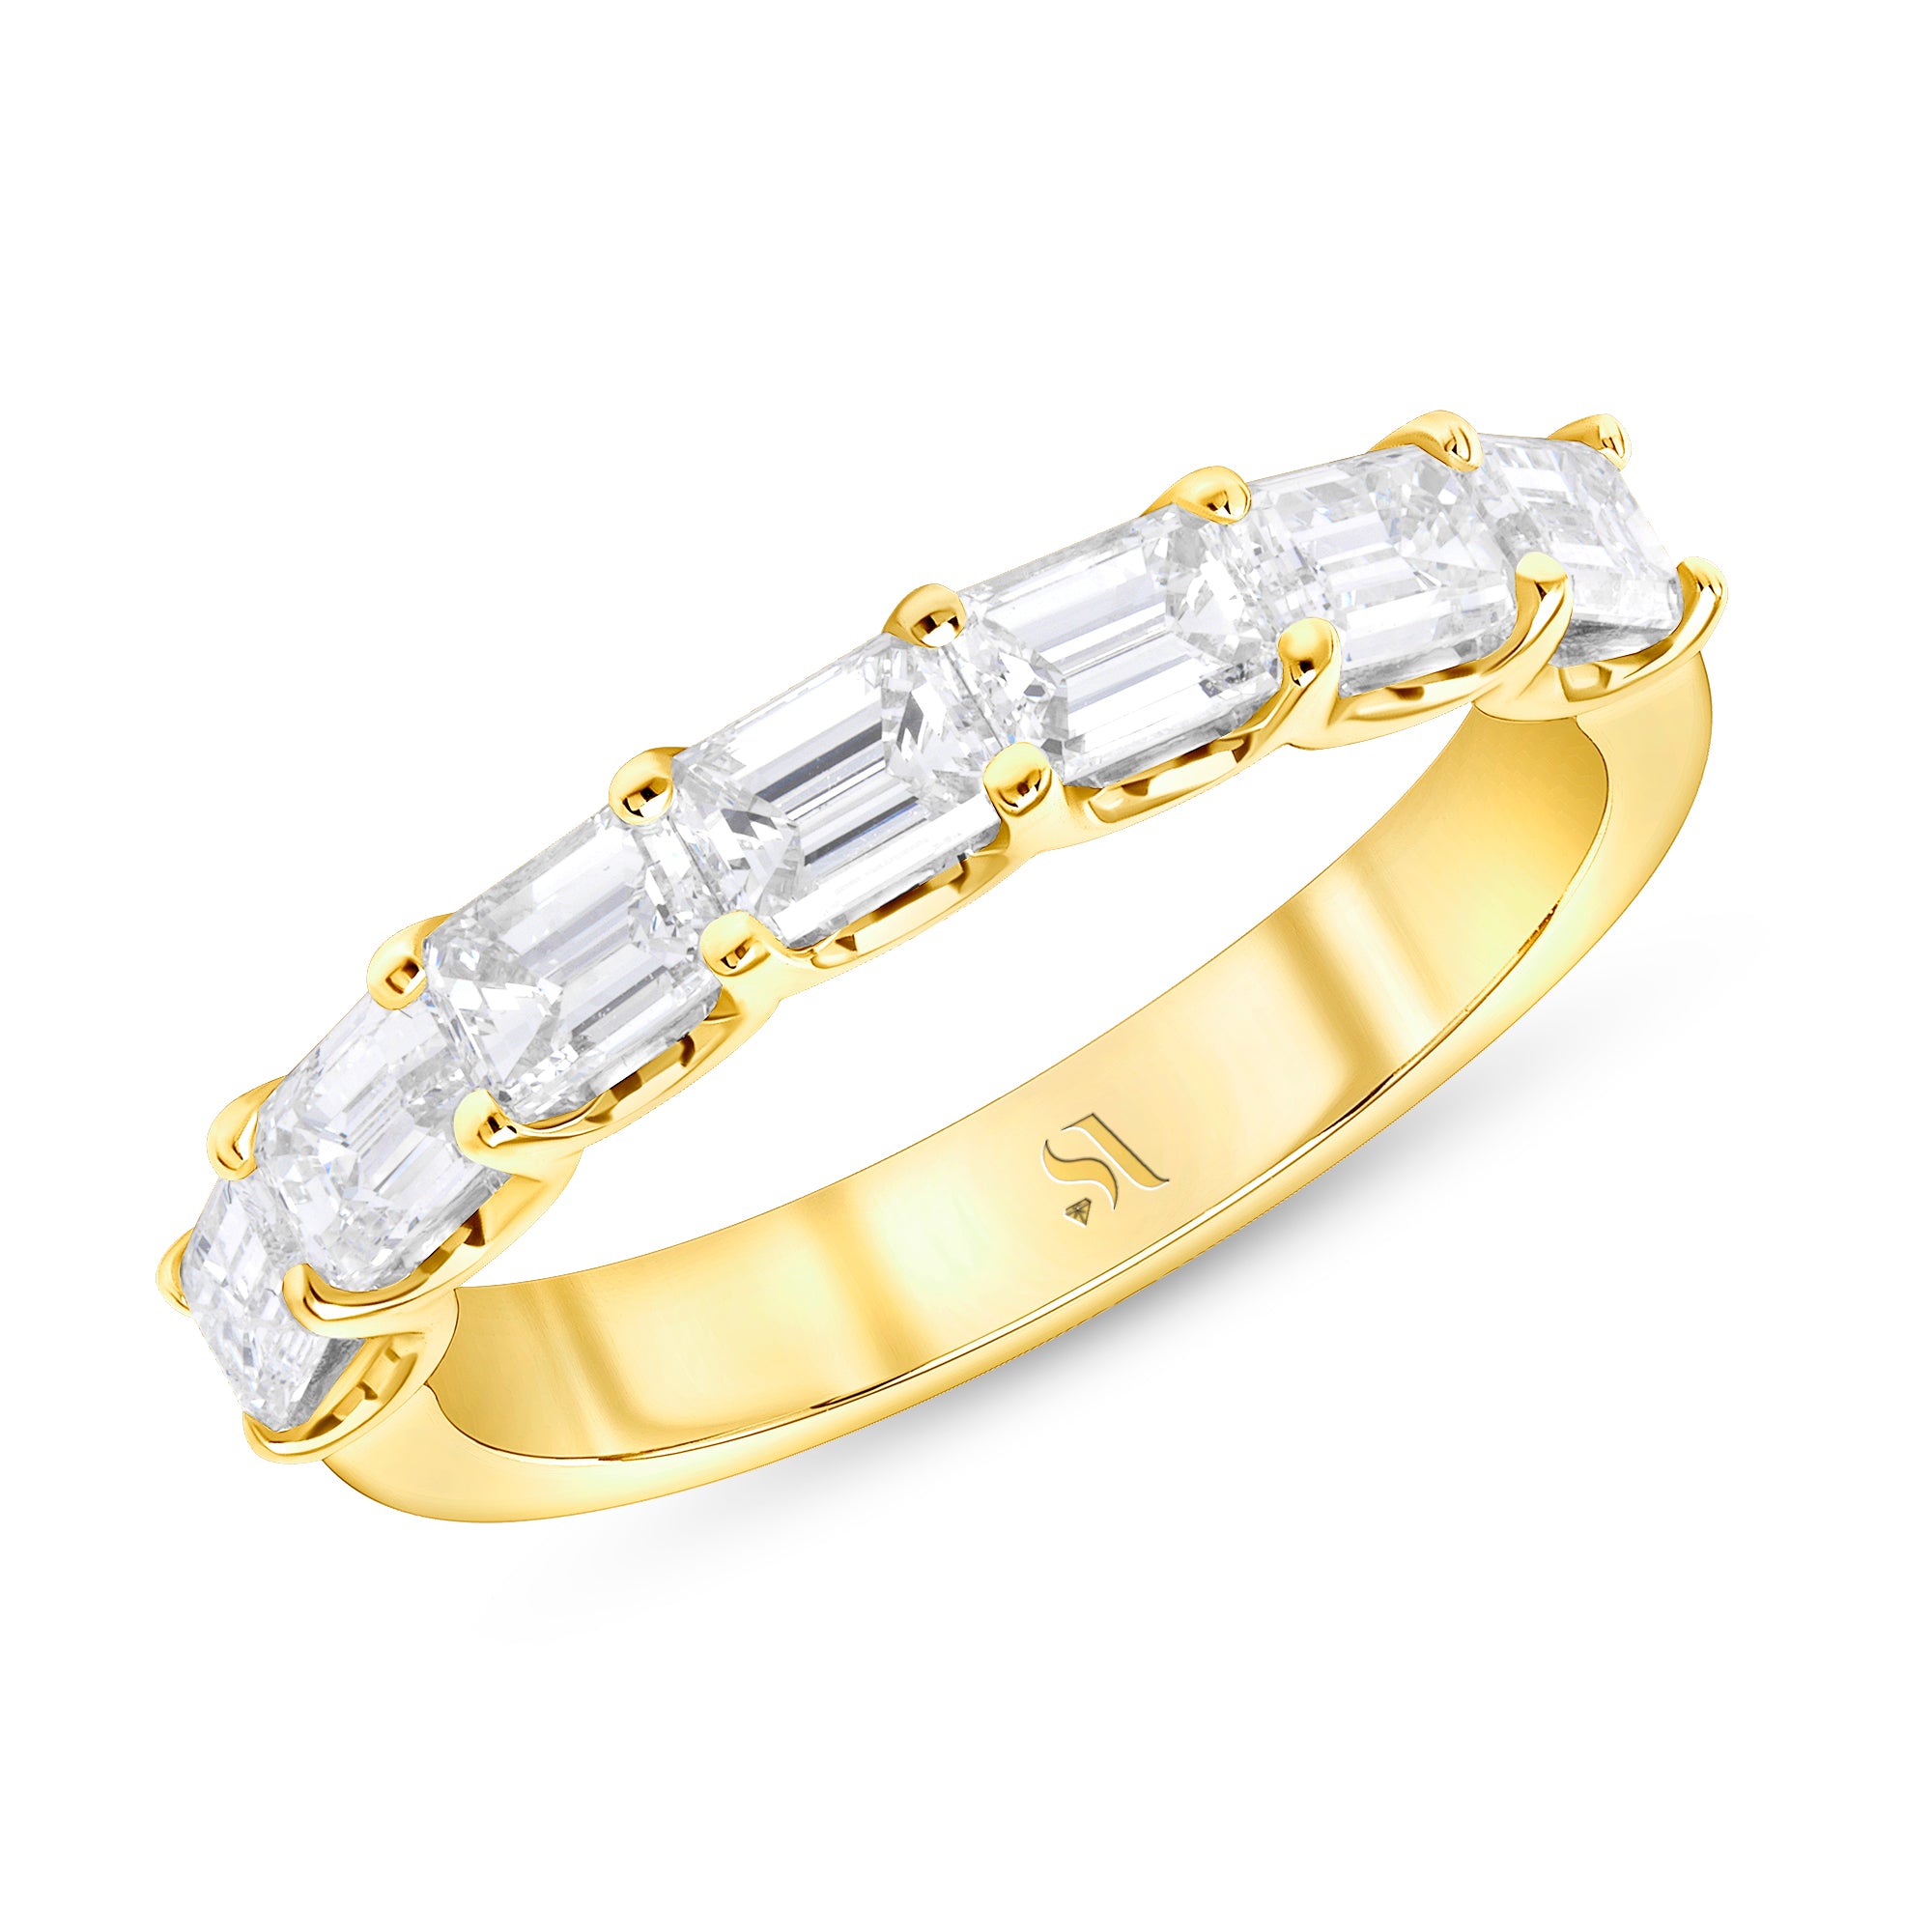 East-West Emerald Cut Yellow Gold Diamond Ring